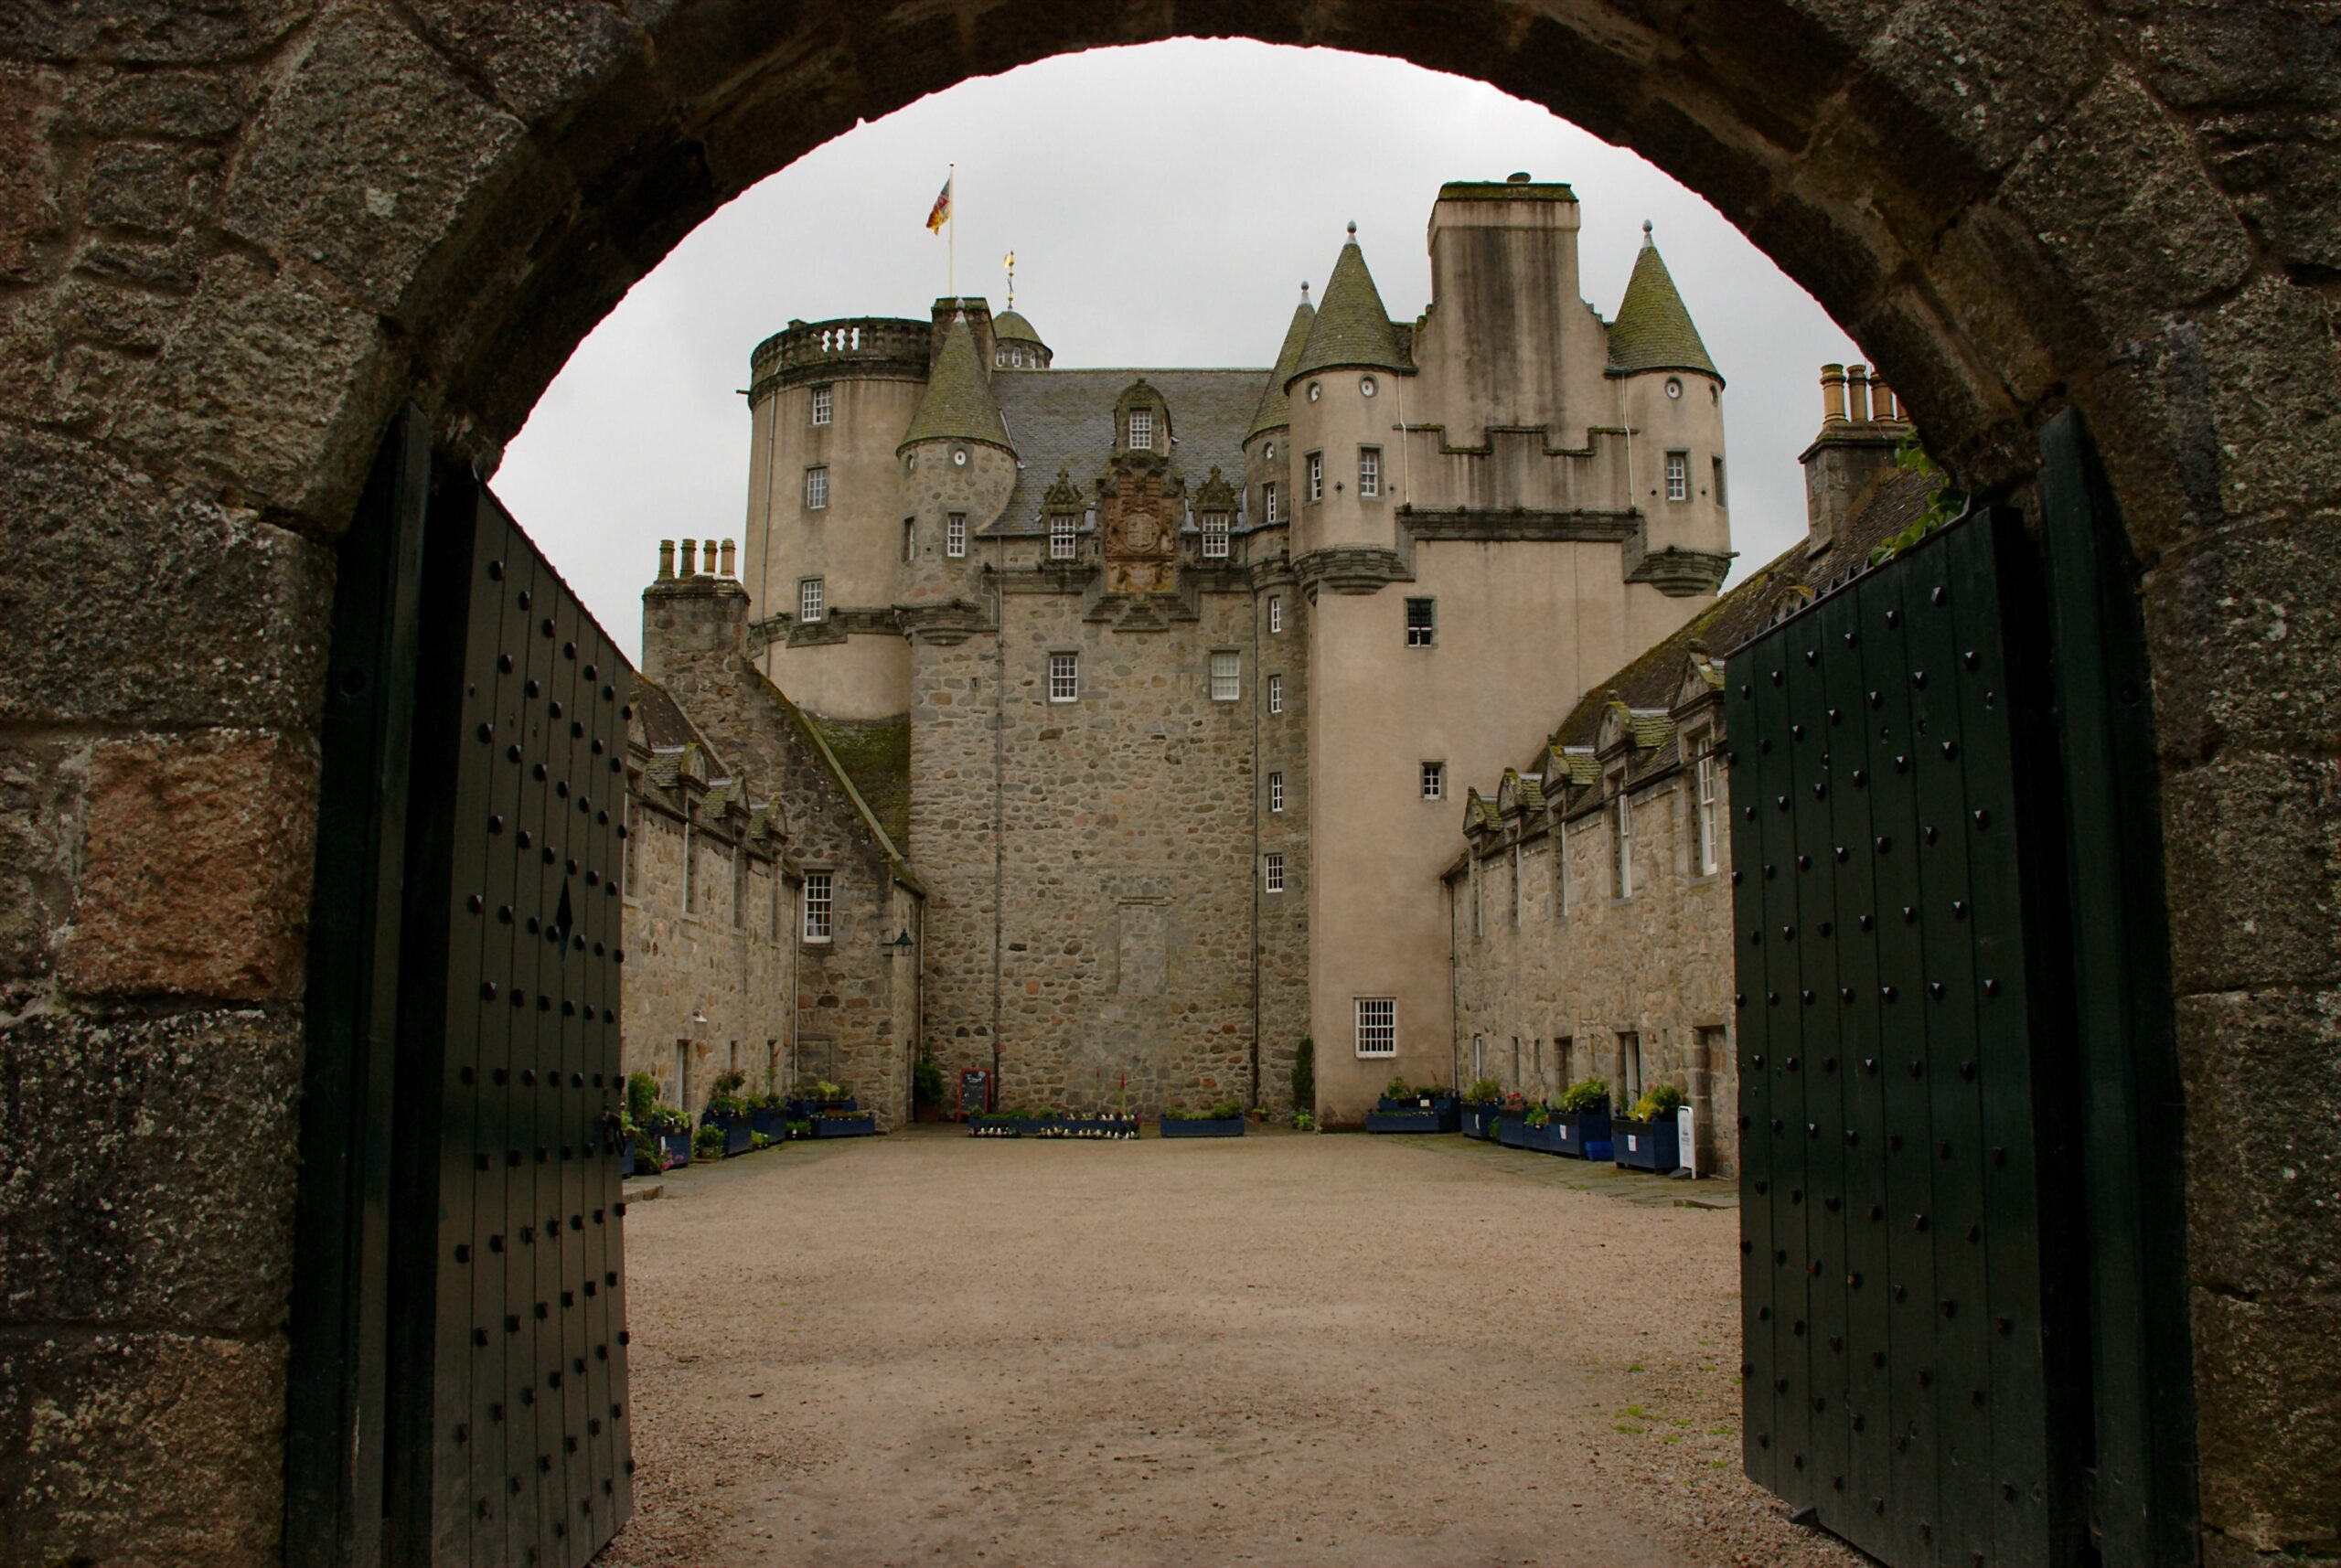 medieval castle courtyard - Google Search | Castle fraser, Alnwick